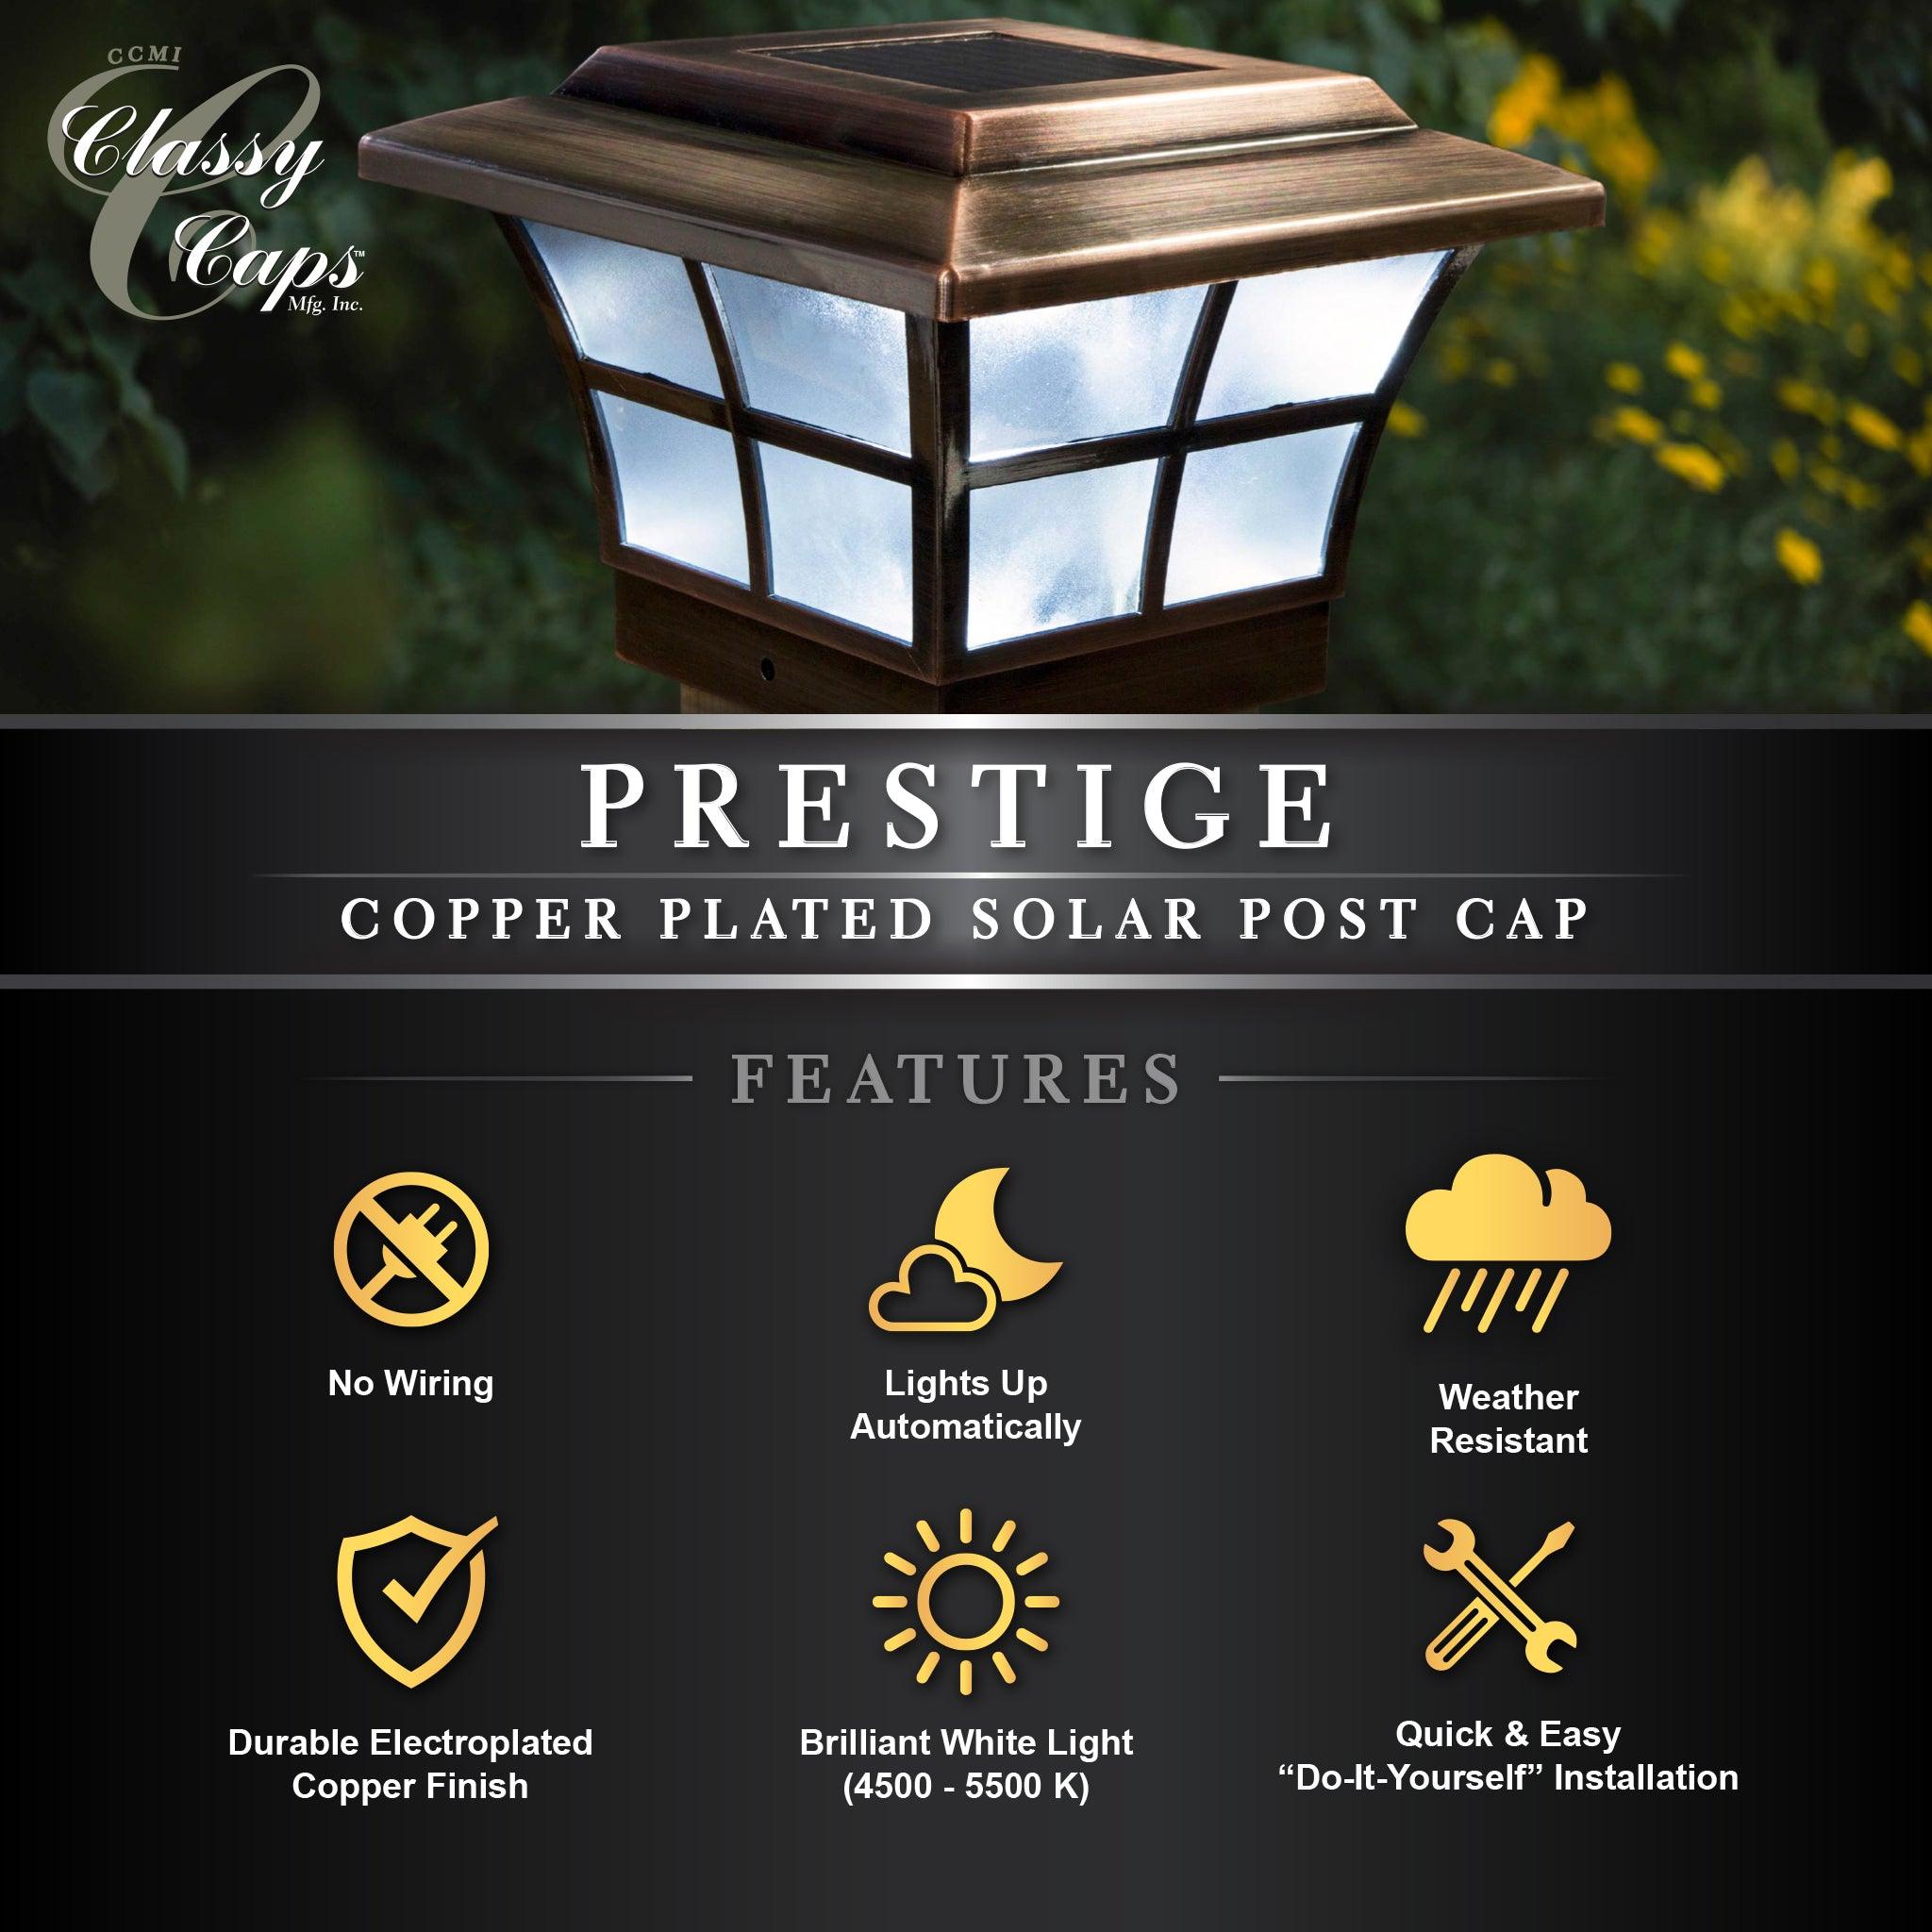 Prestige Solar Post Cap - Copper Electroplated SLO79C - Classy Caps Mfg. Inc.